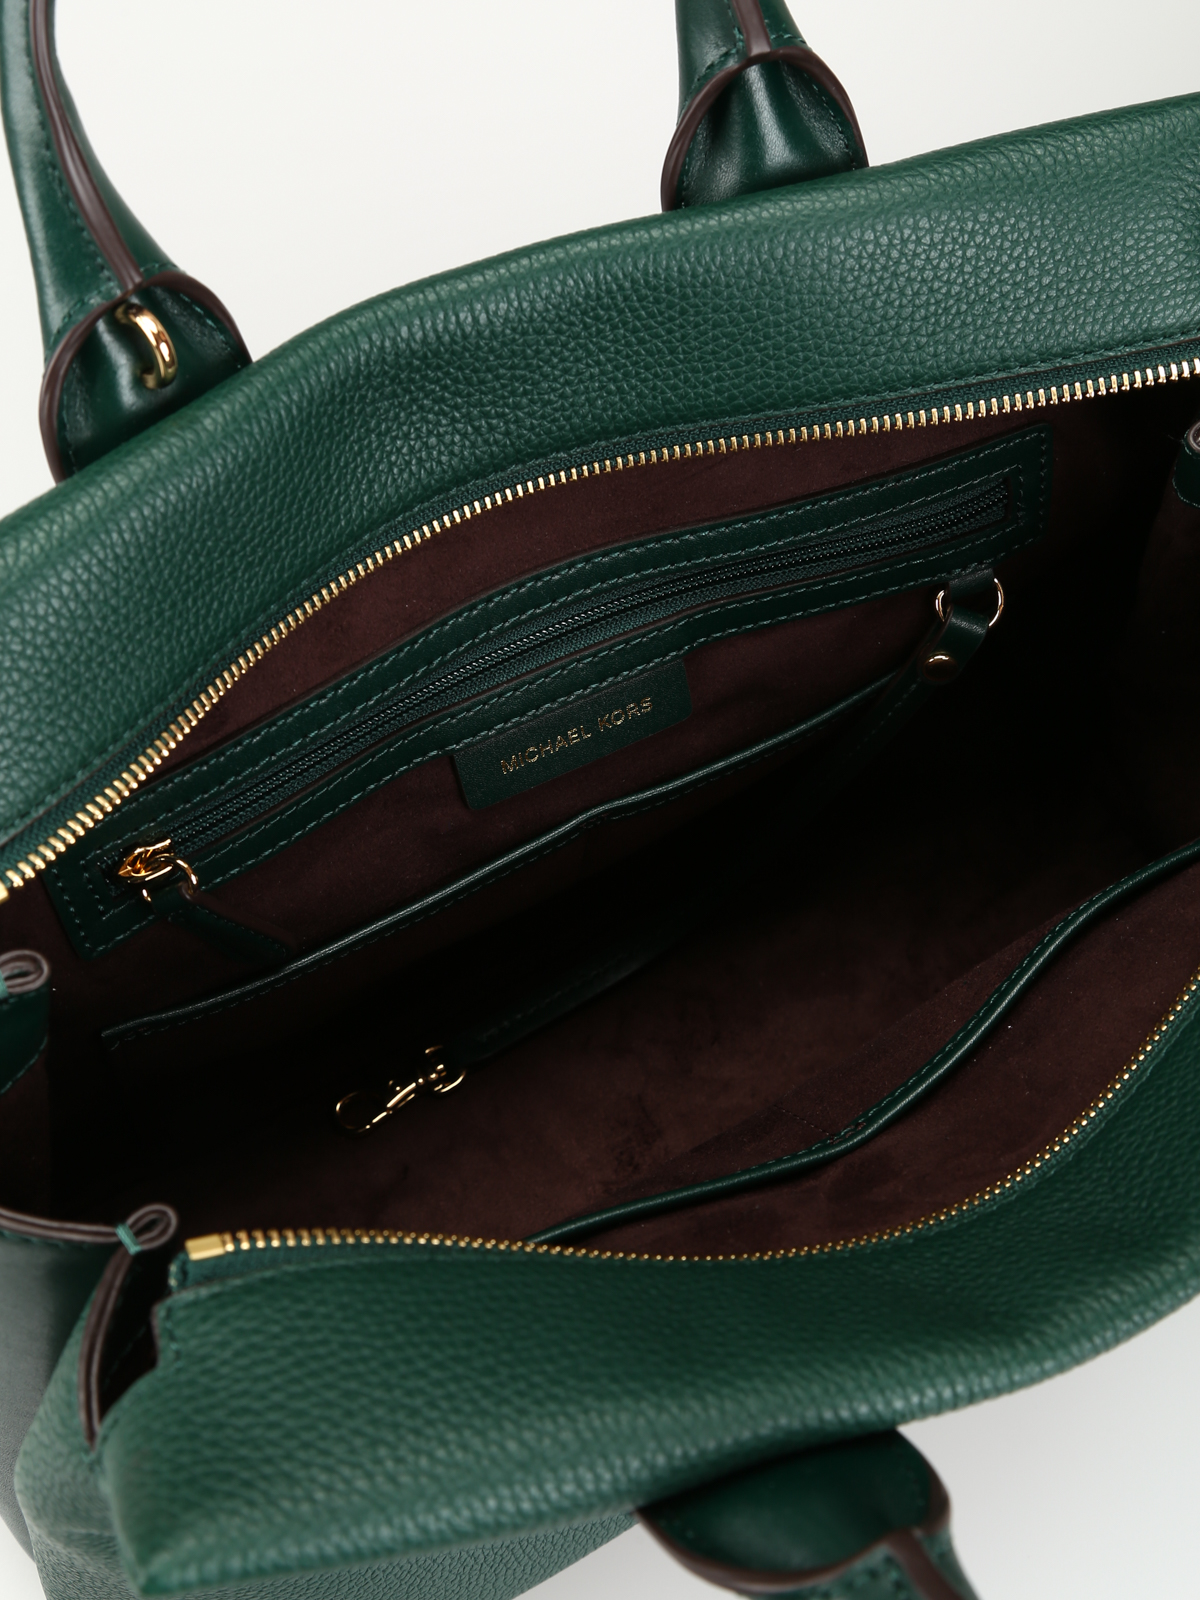 Michael Kors Green Leather Handbags 